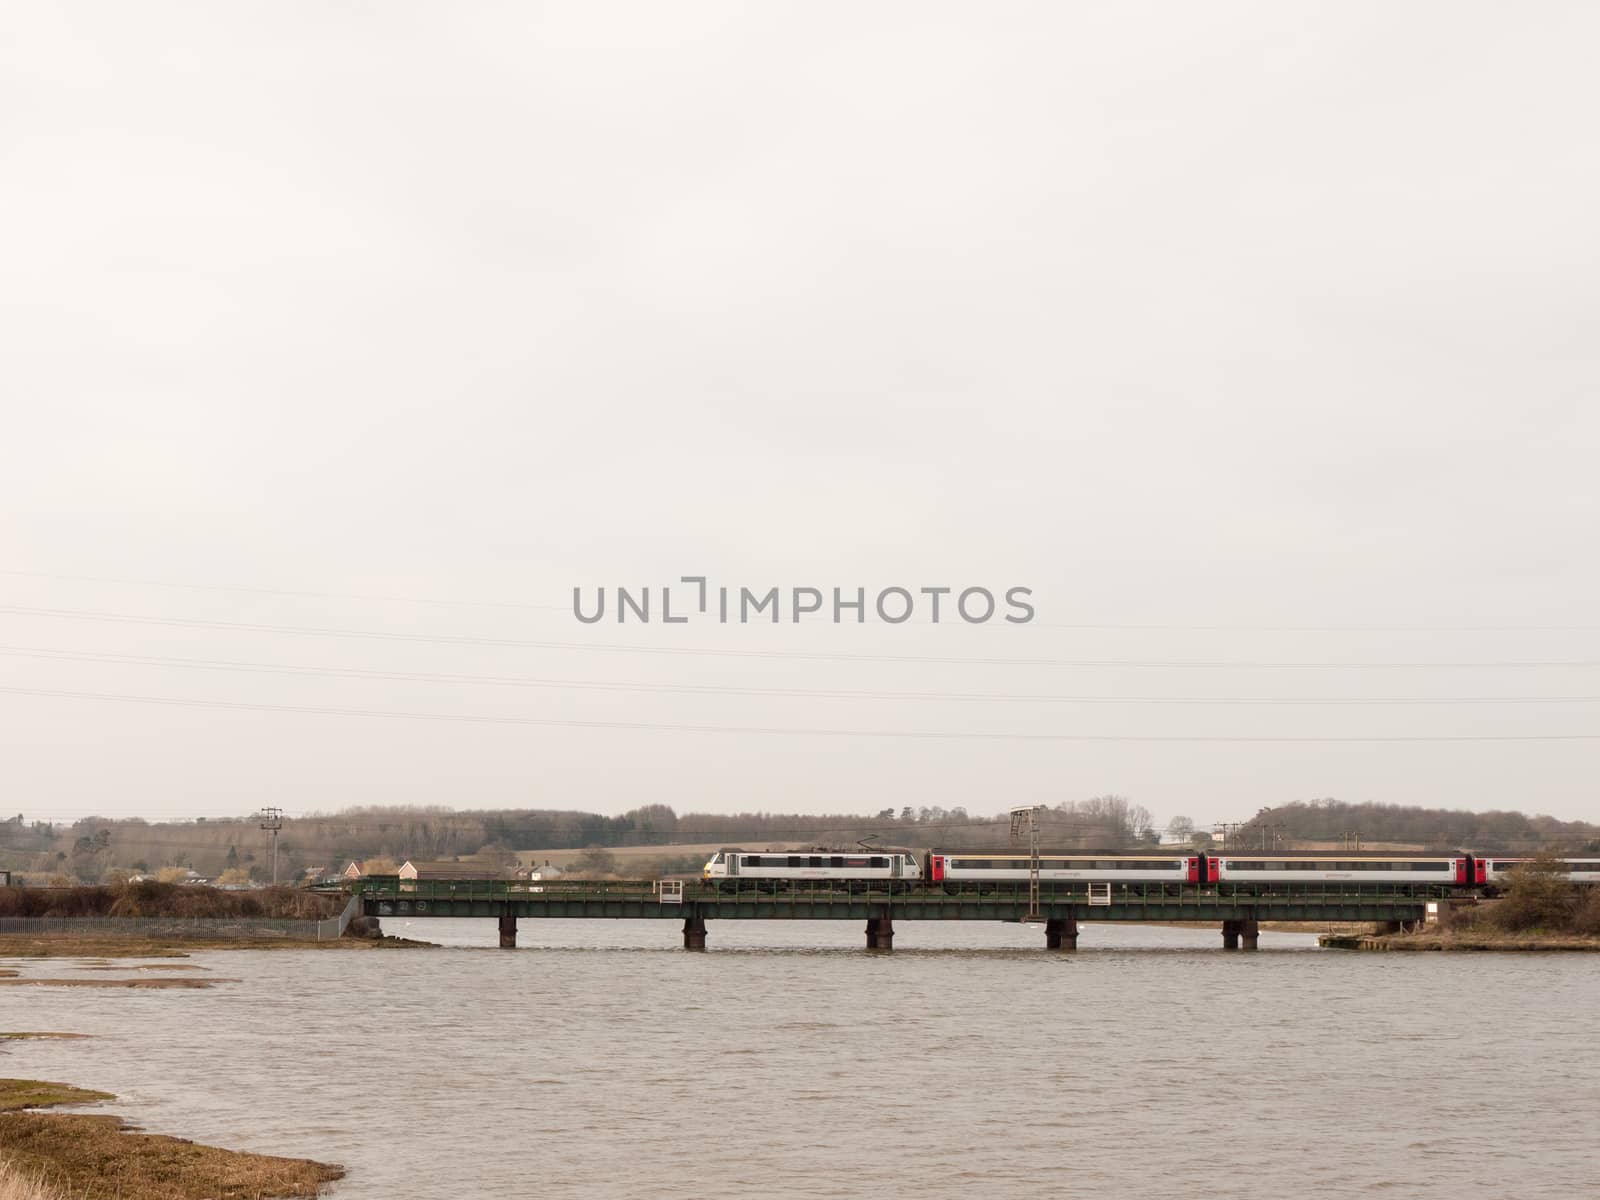 moving train blur motion on bridge across river large sky open space; essex; england; uk